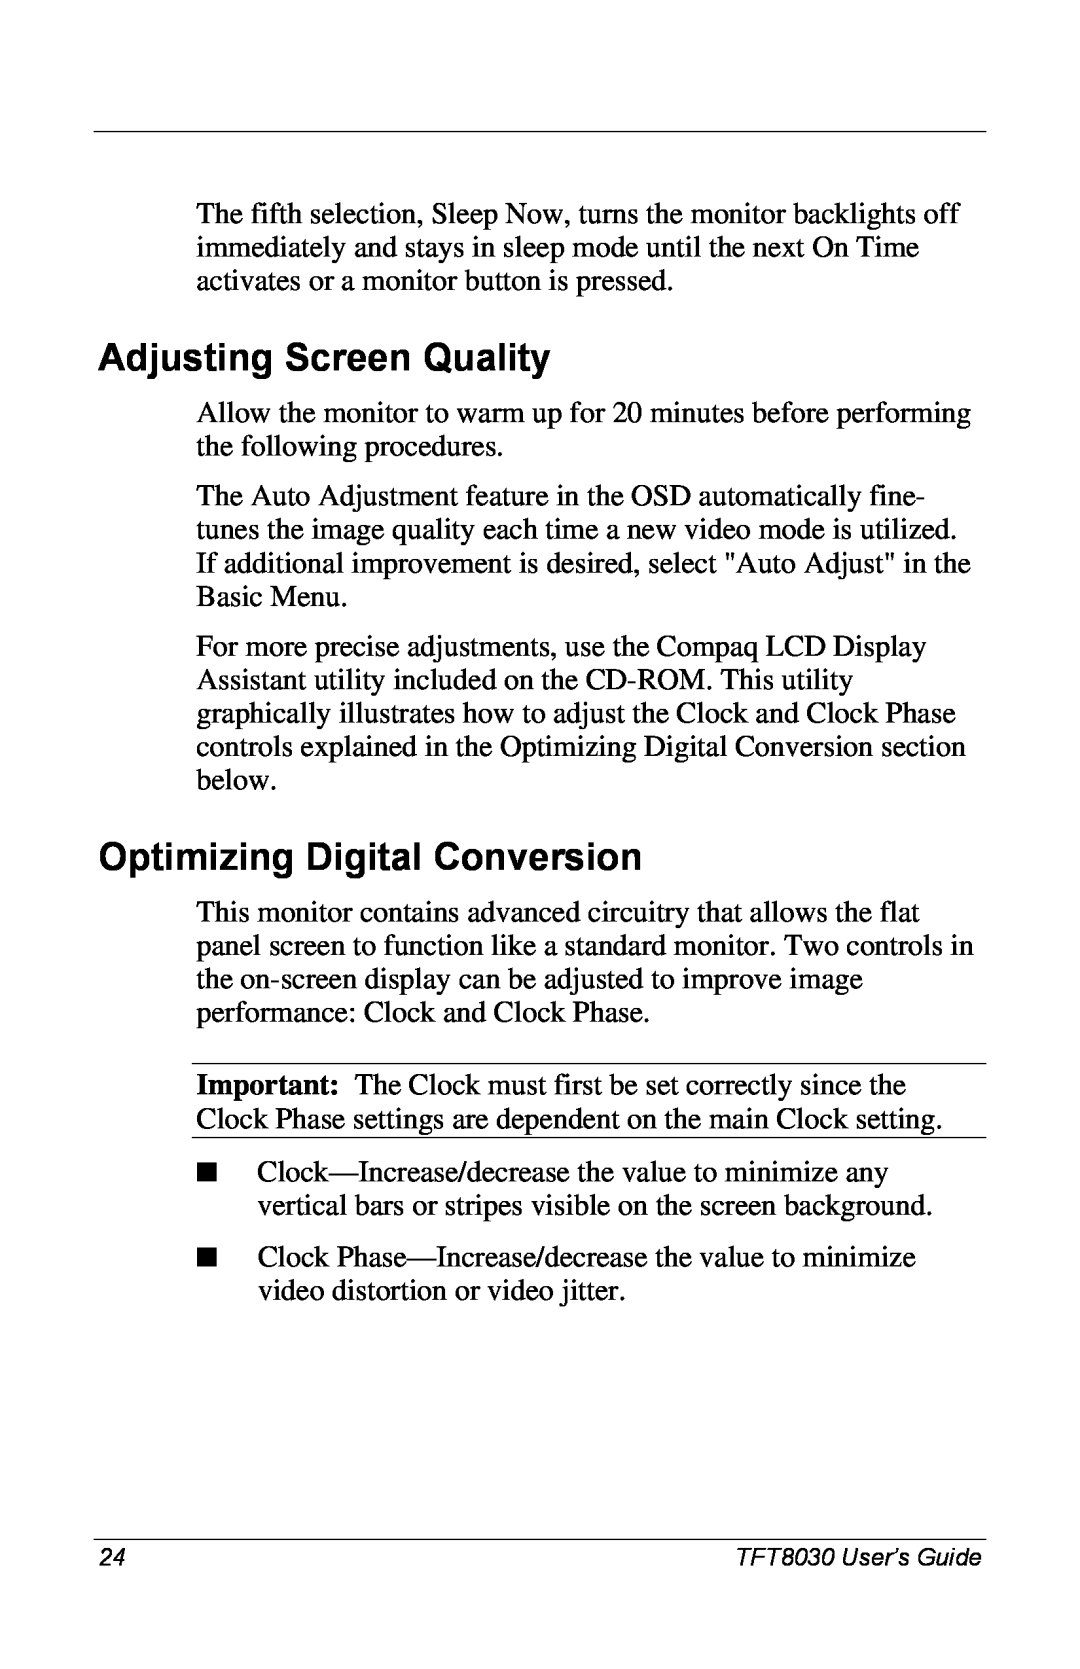 Compaq 8030 manual Adjusting Screen Quality, Optimizing Digital Conversion 